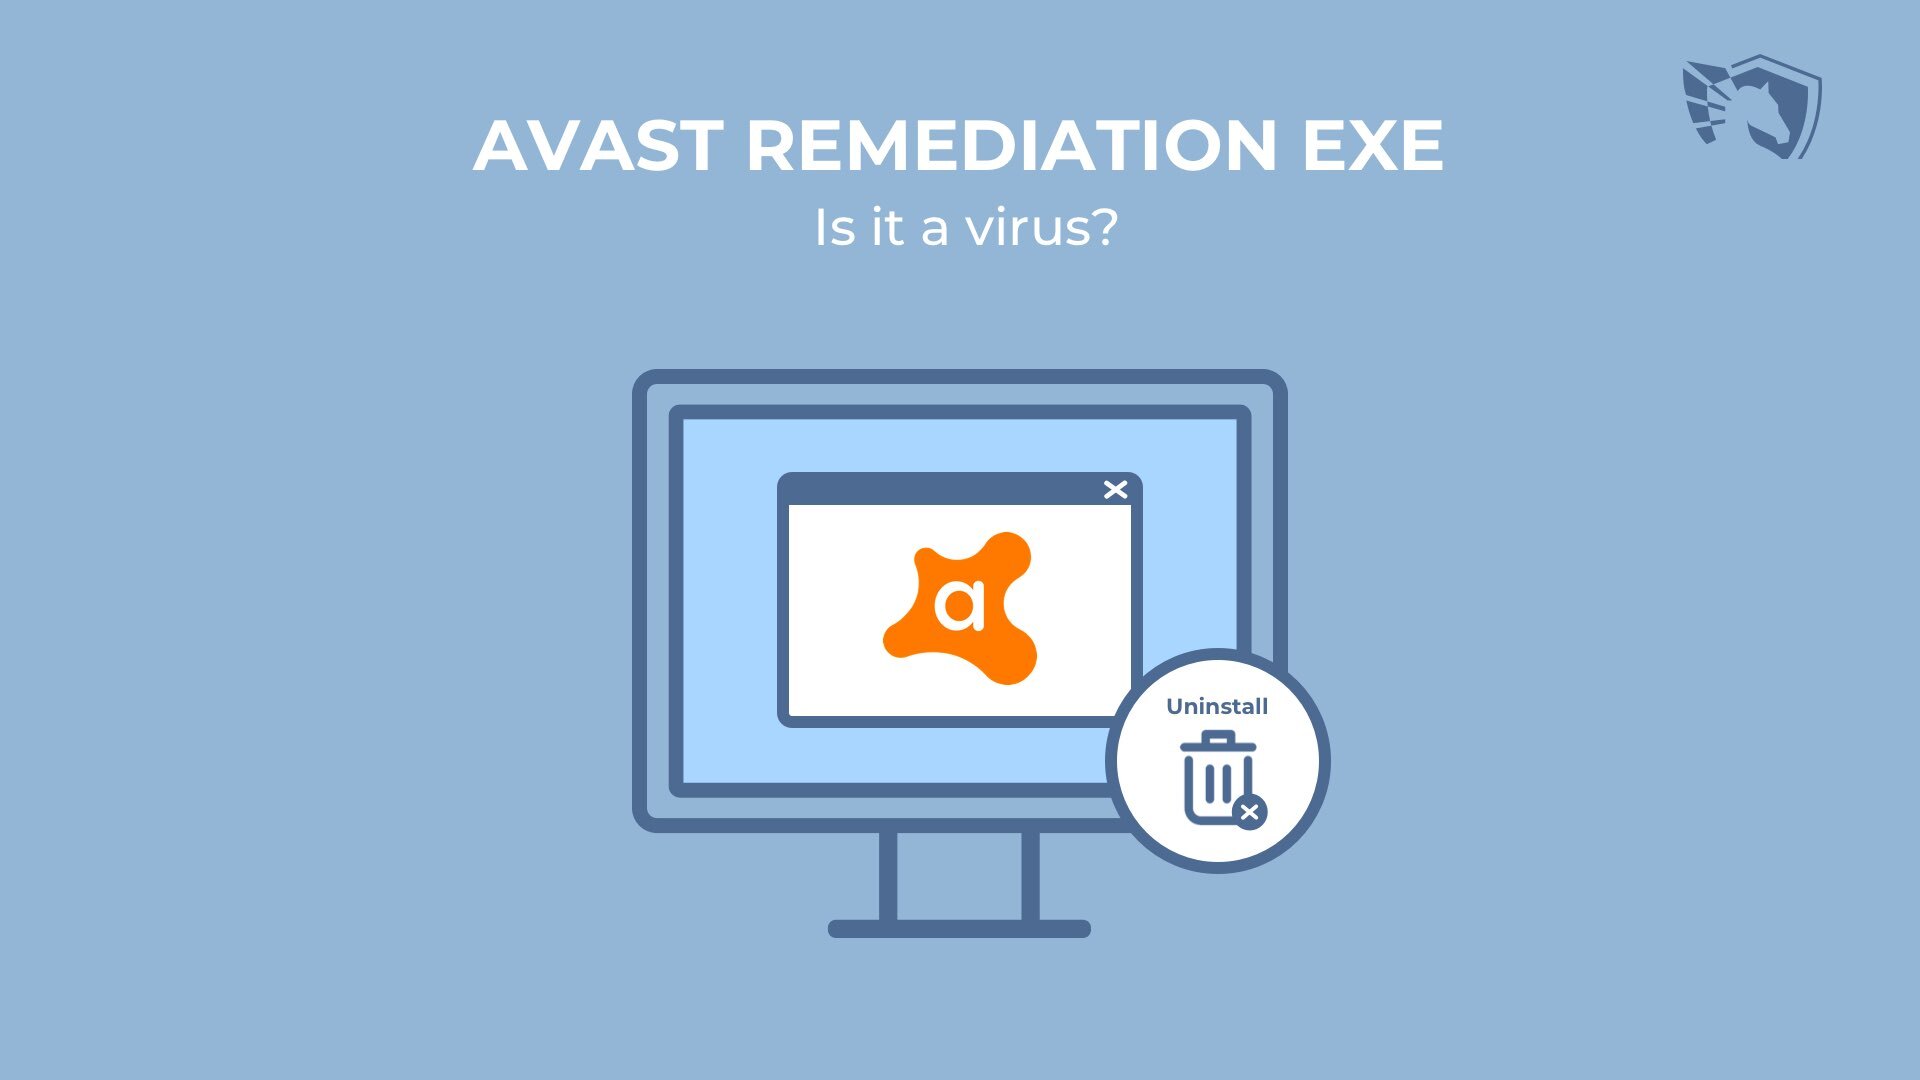 Exe de remediación de Avast. ¿Es un virus??